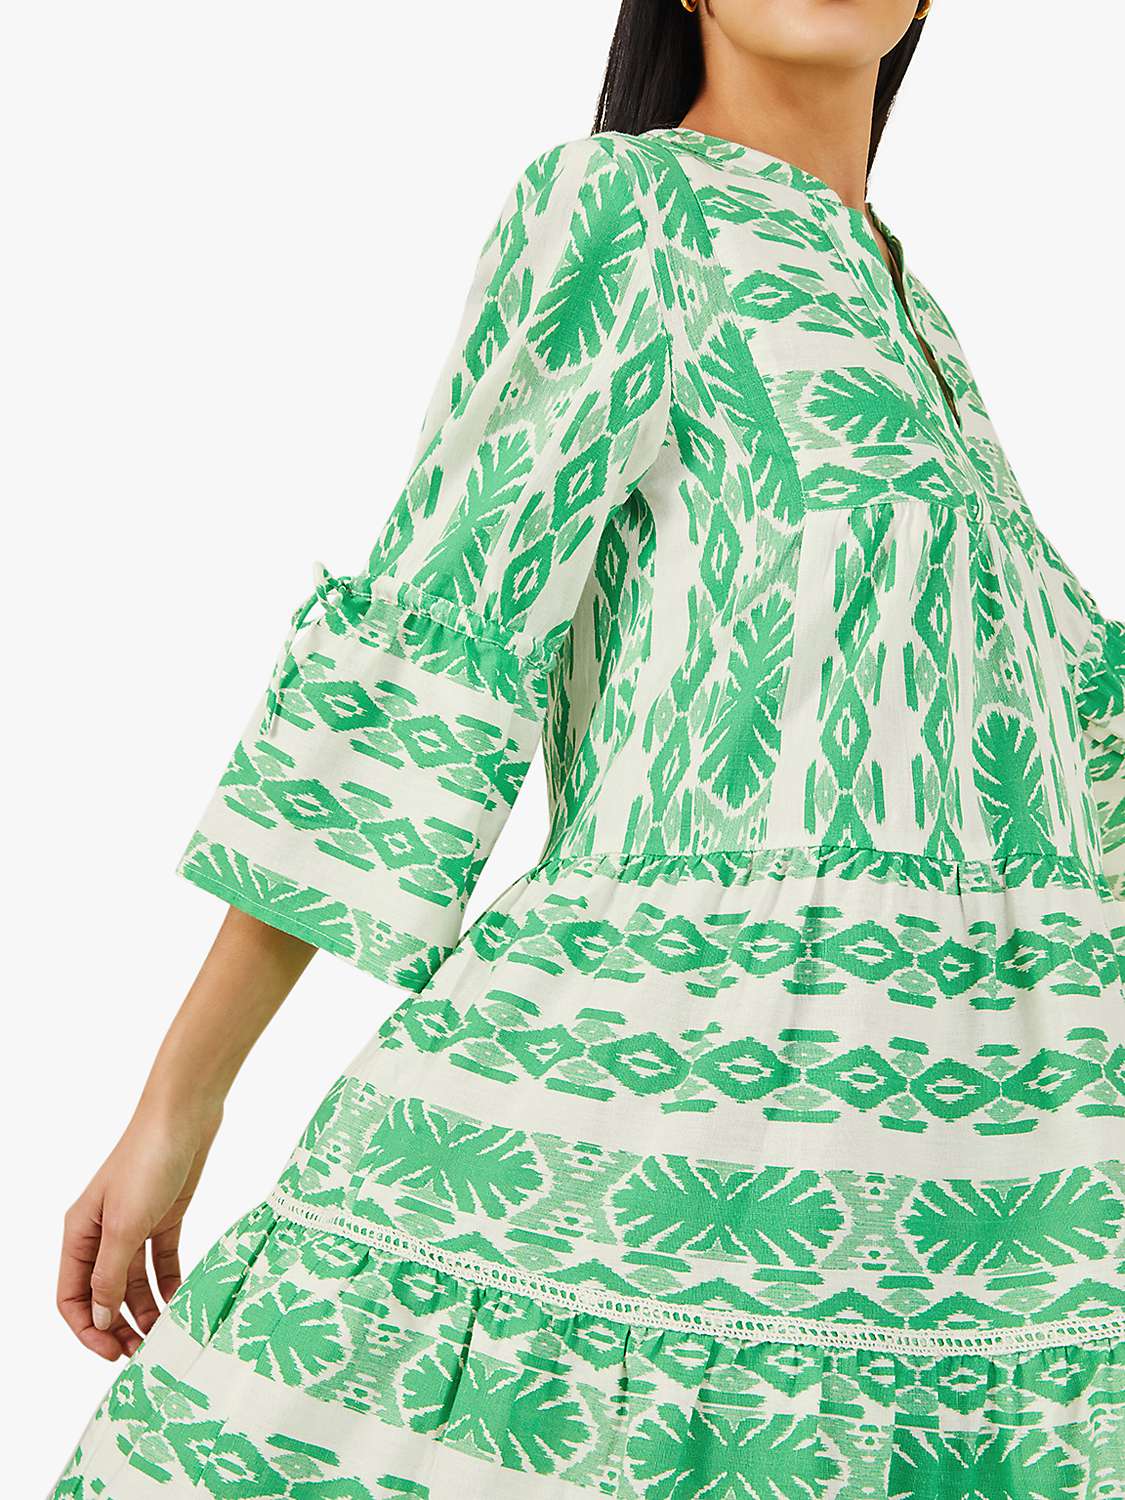 Buy Accessorize Geometric Jacquard Print Knee Length Dress, Mid Green/White Online at johnlewis.com